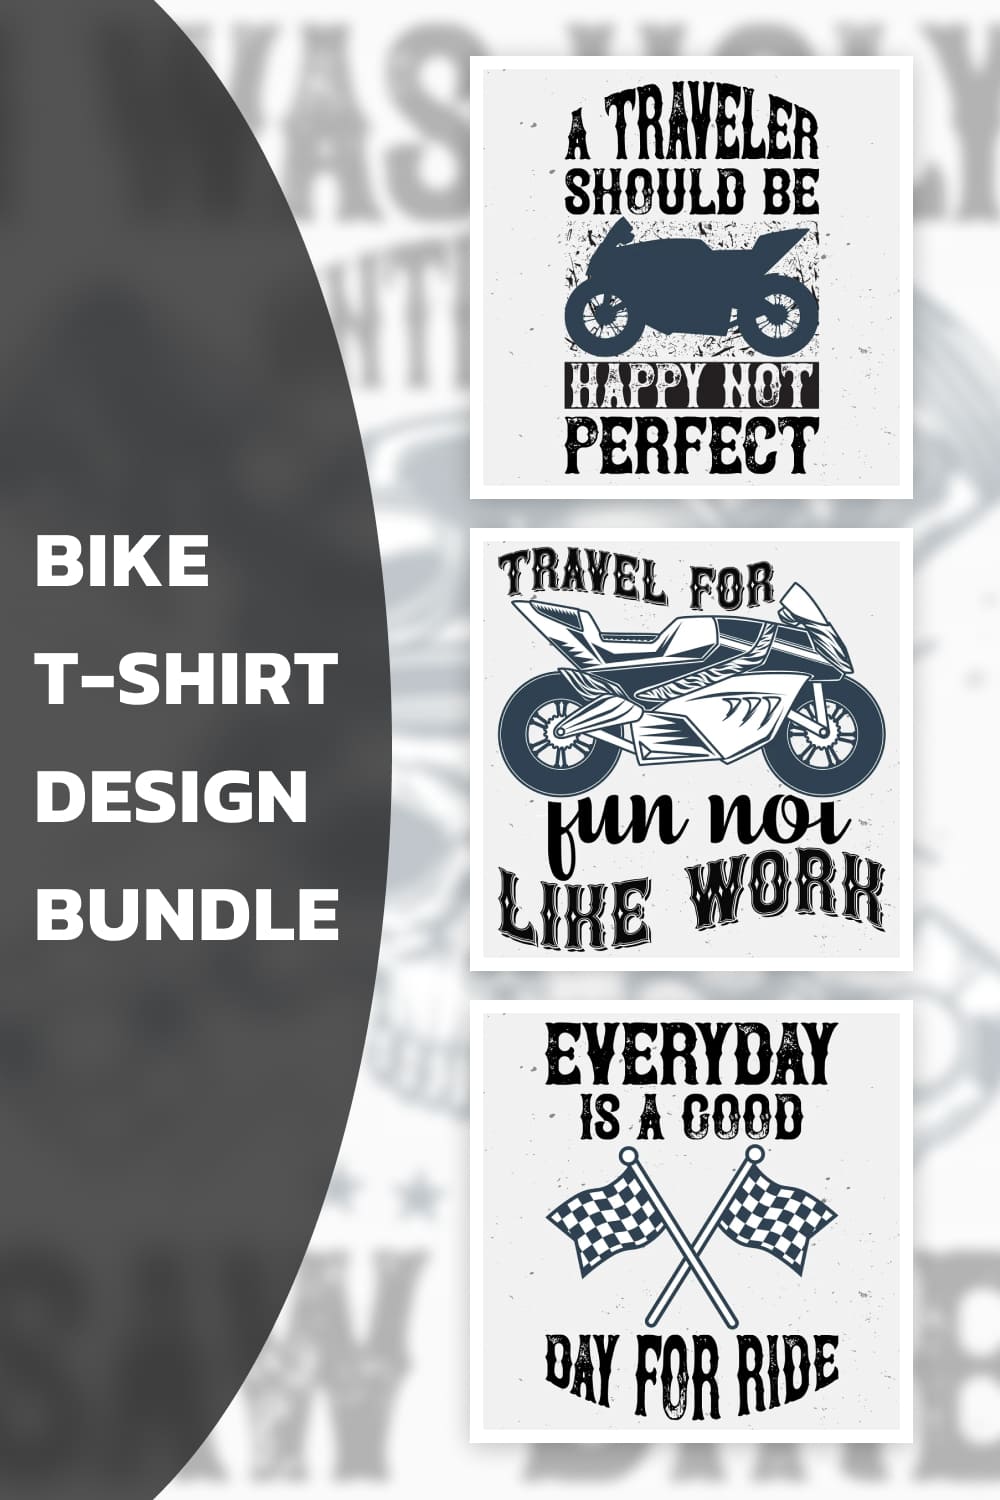 Bike T-Shirt Design Bundle - Pinterest.